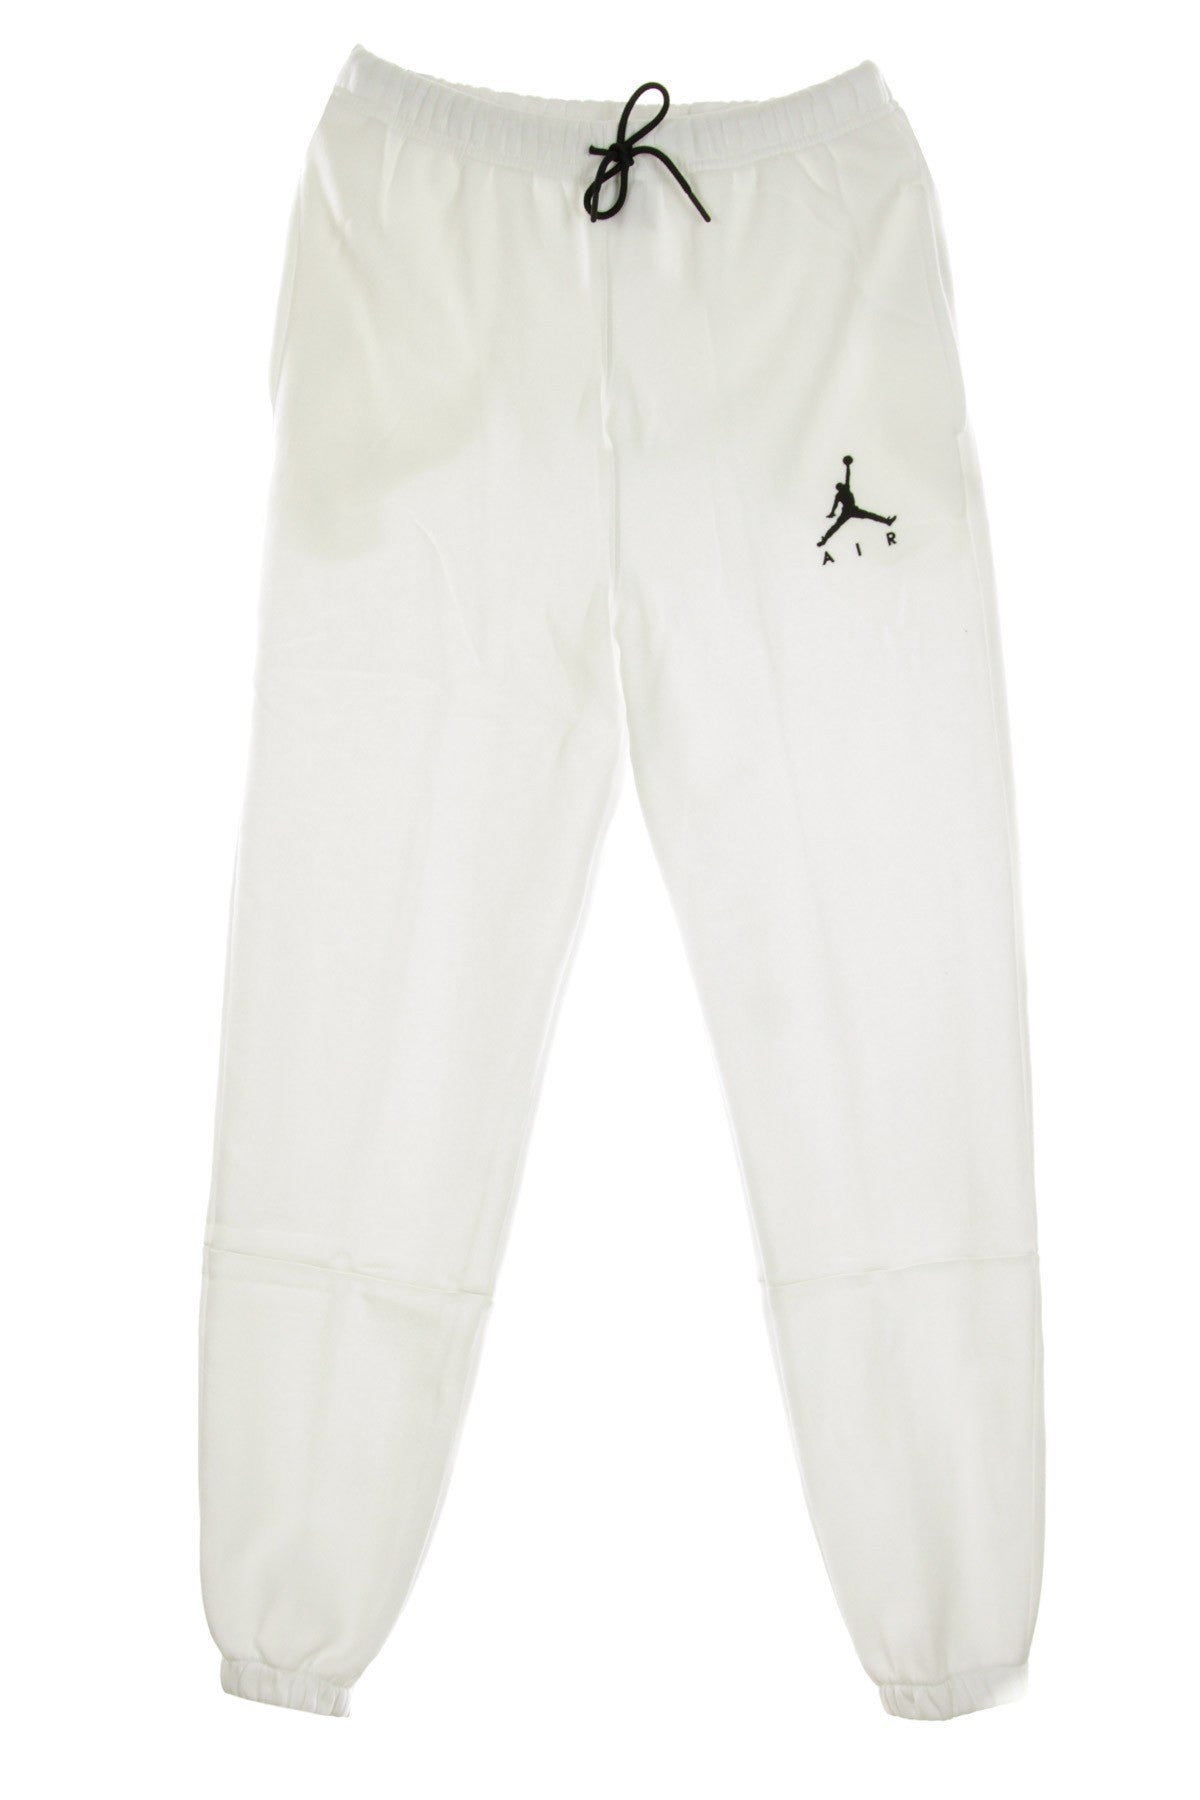 Jumpman Air Fleece Men's Fleece Tracksuit Pants White/white/black